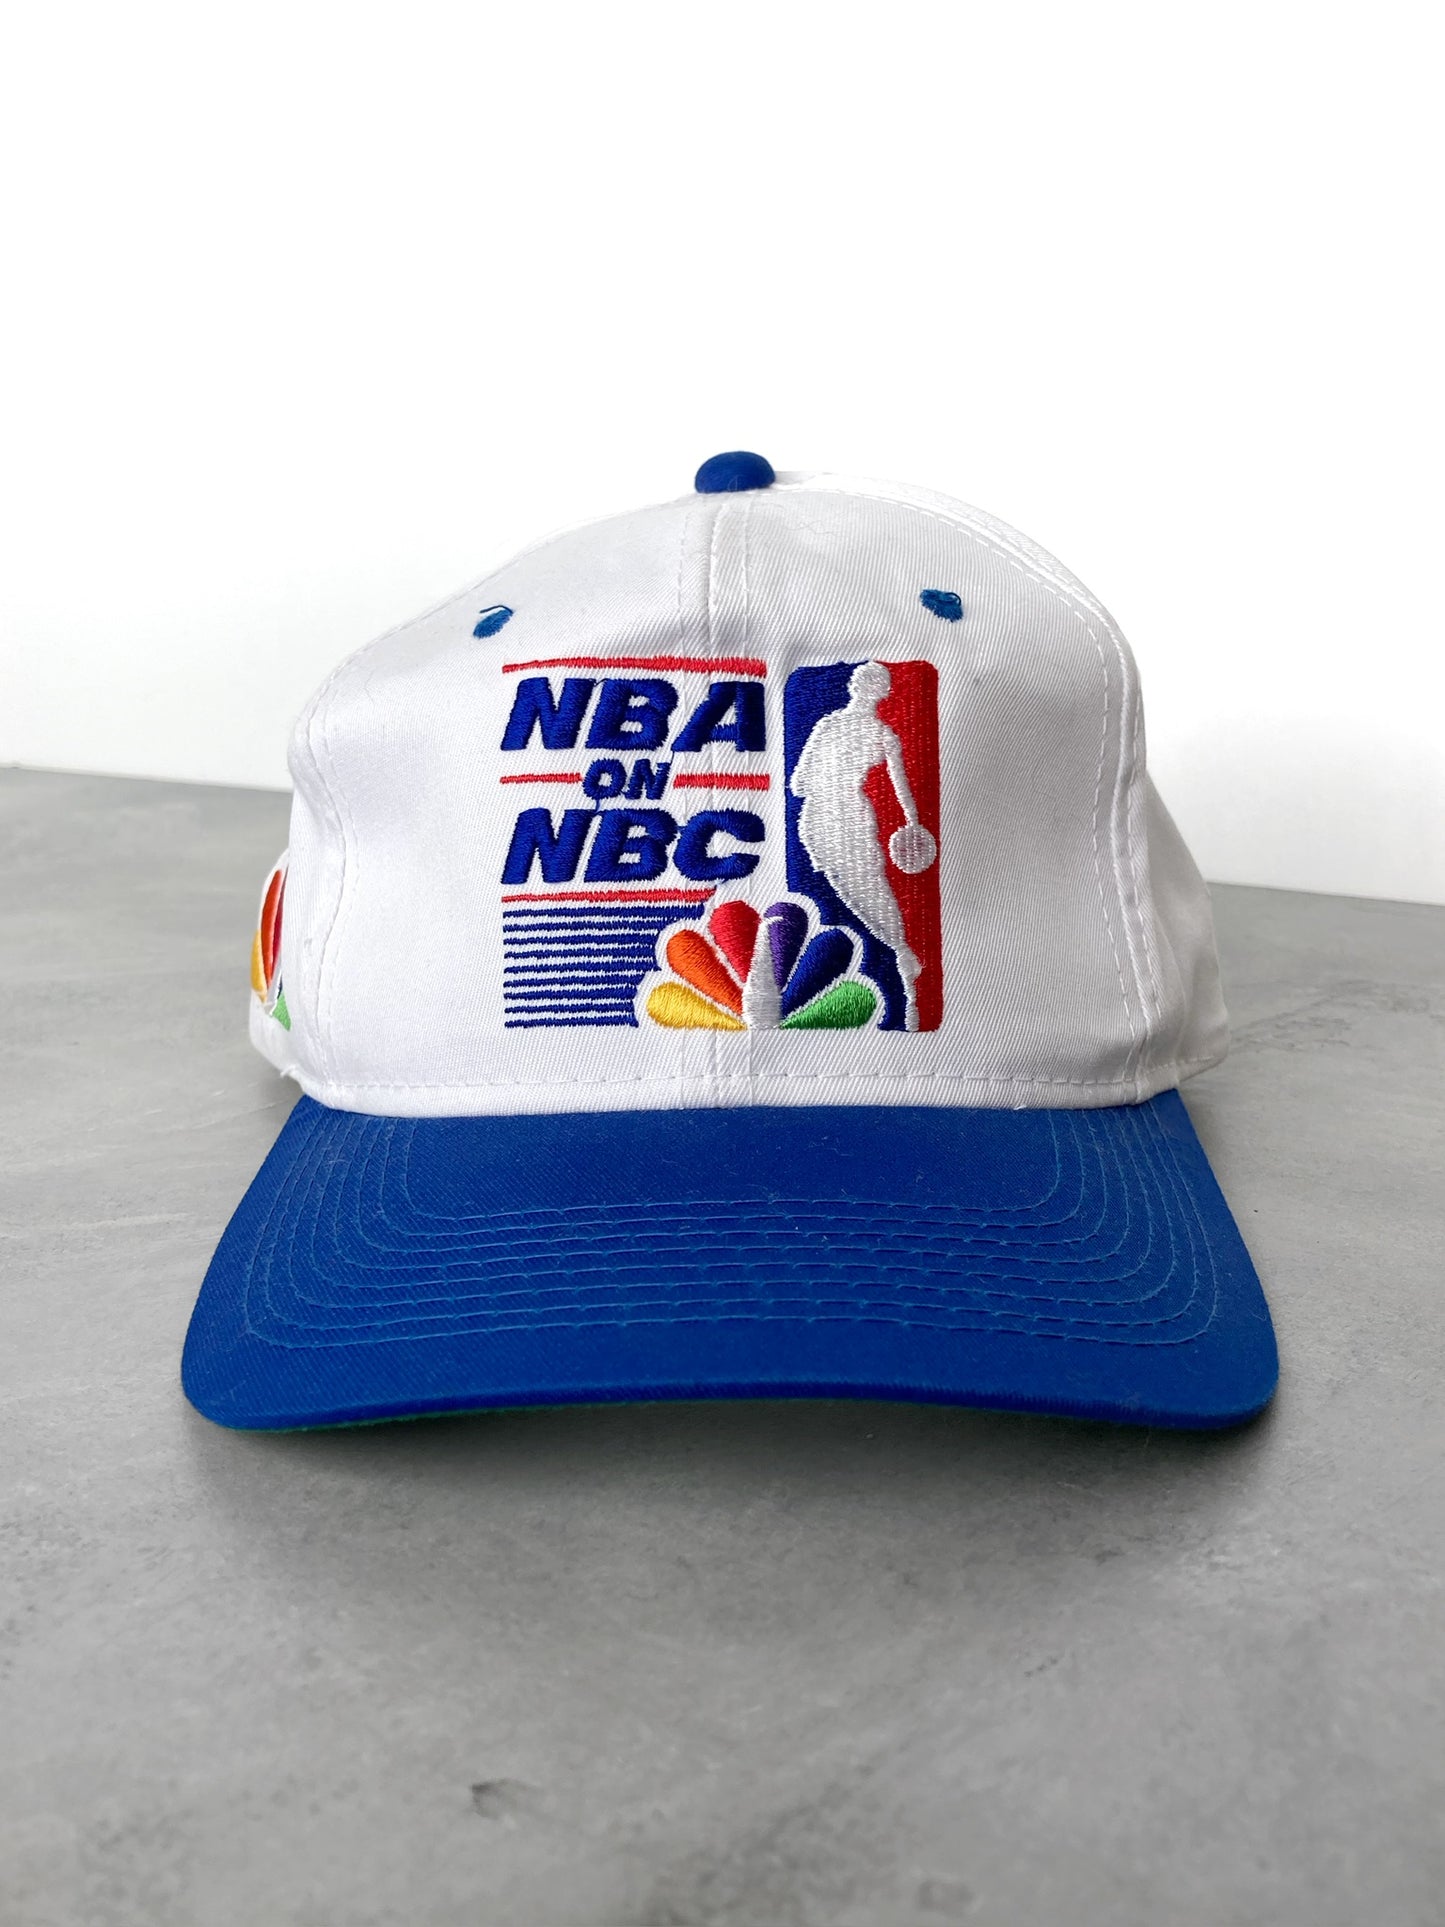 NBA on NBC Snapback Hat 90's